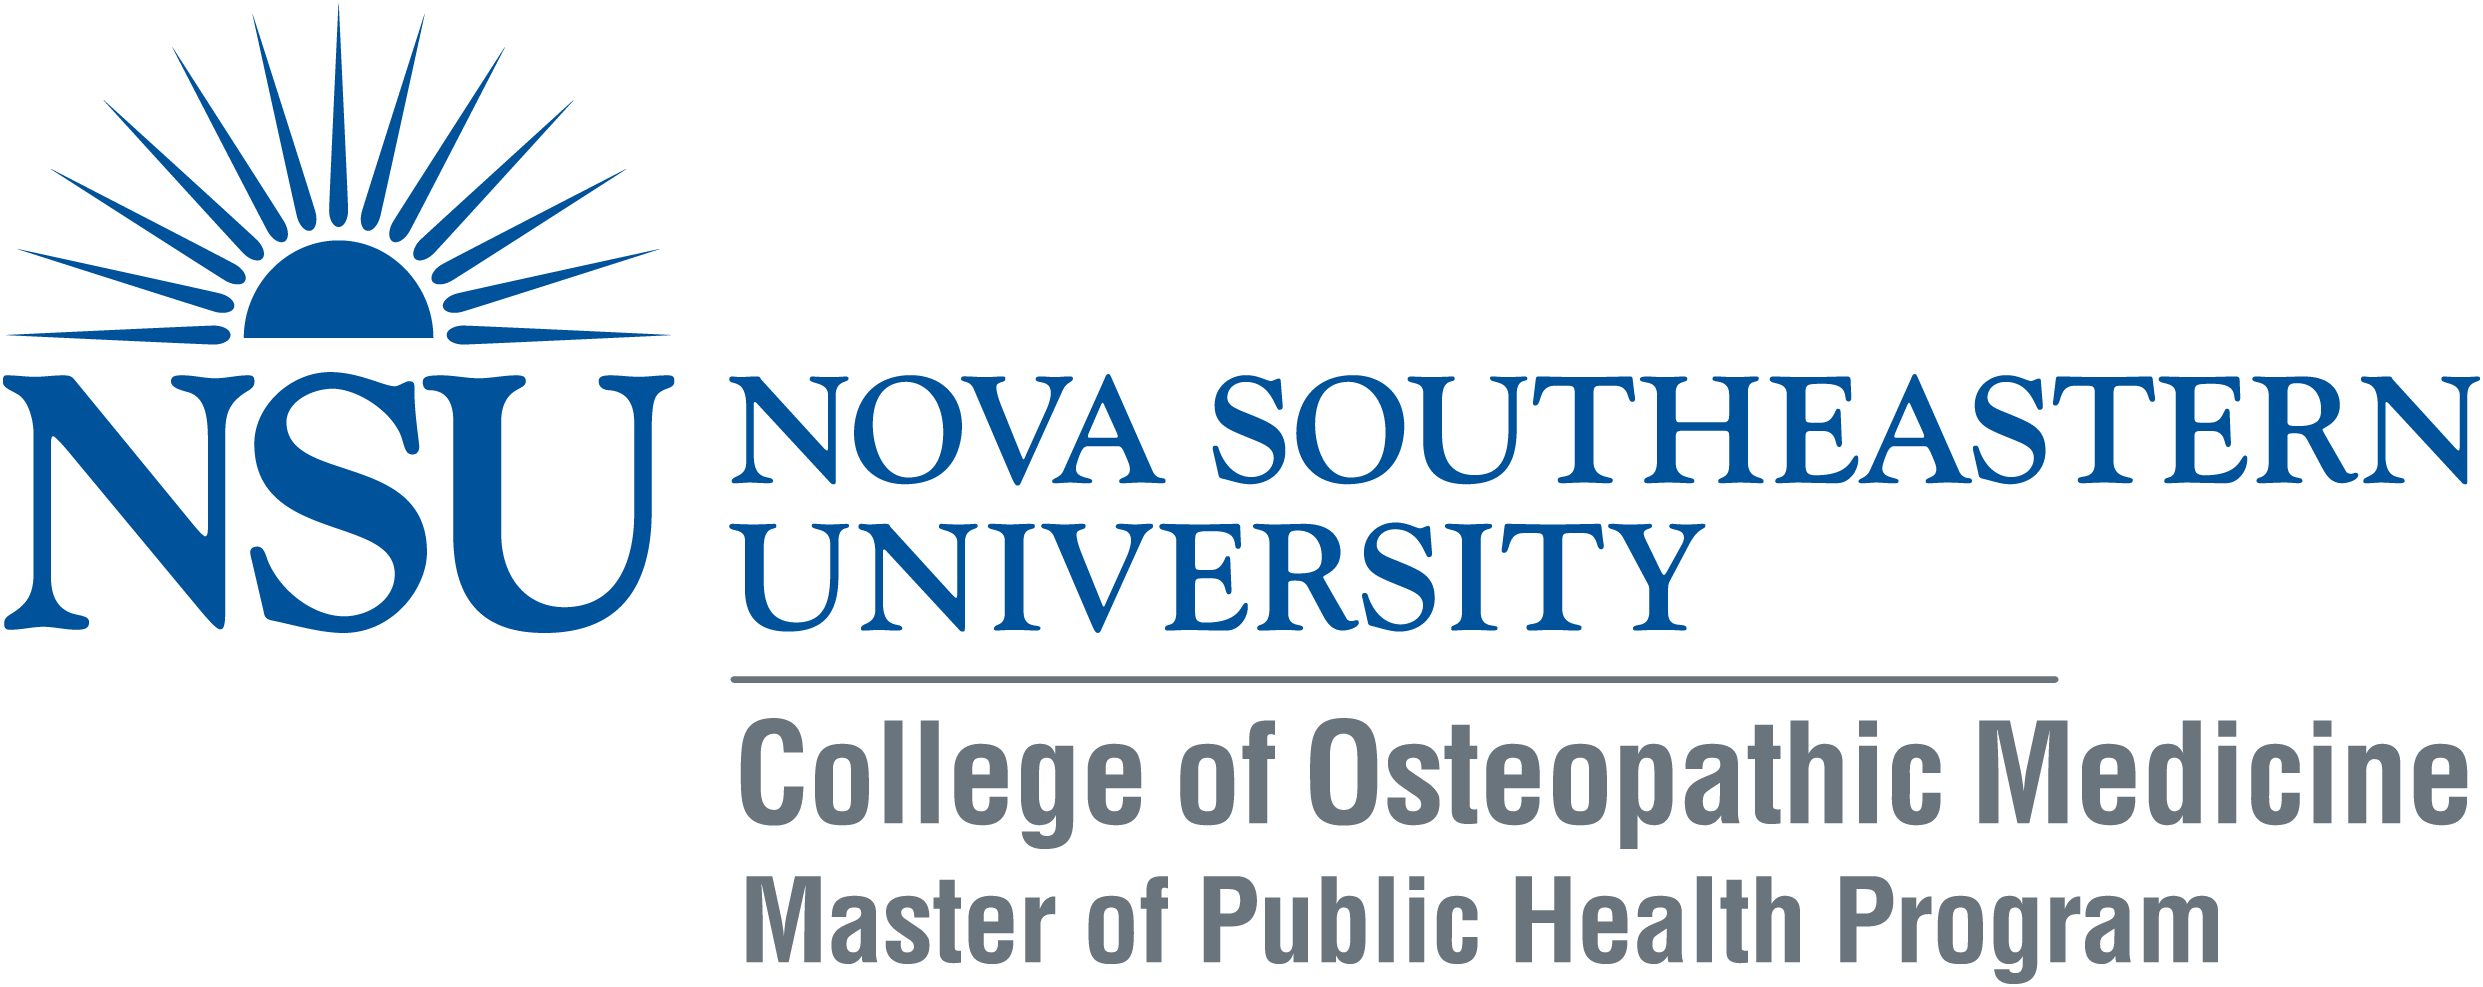 Nova Southeastern University - Council on Education for Public Health